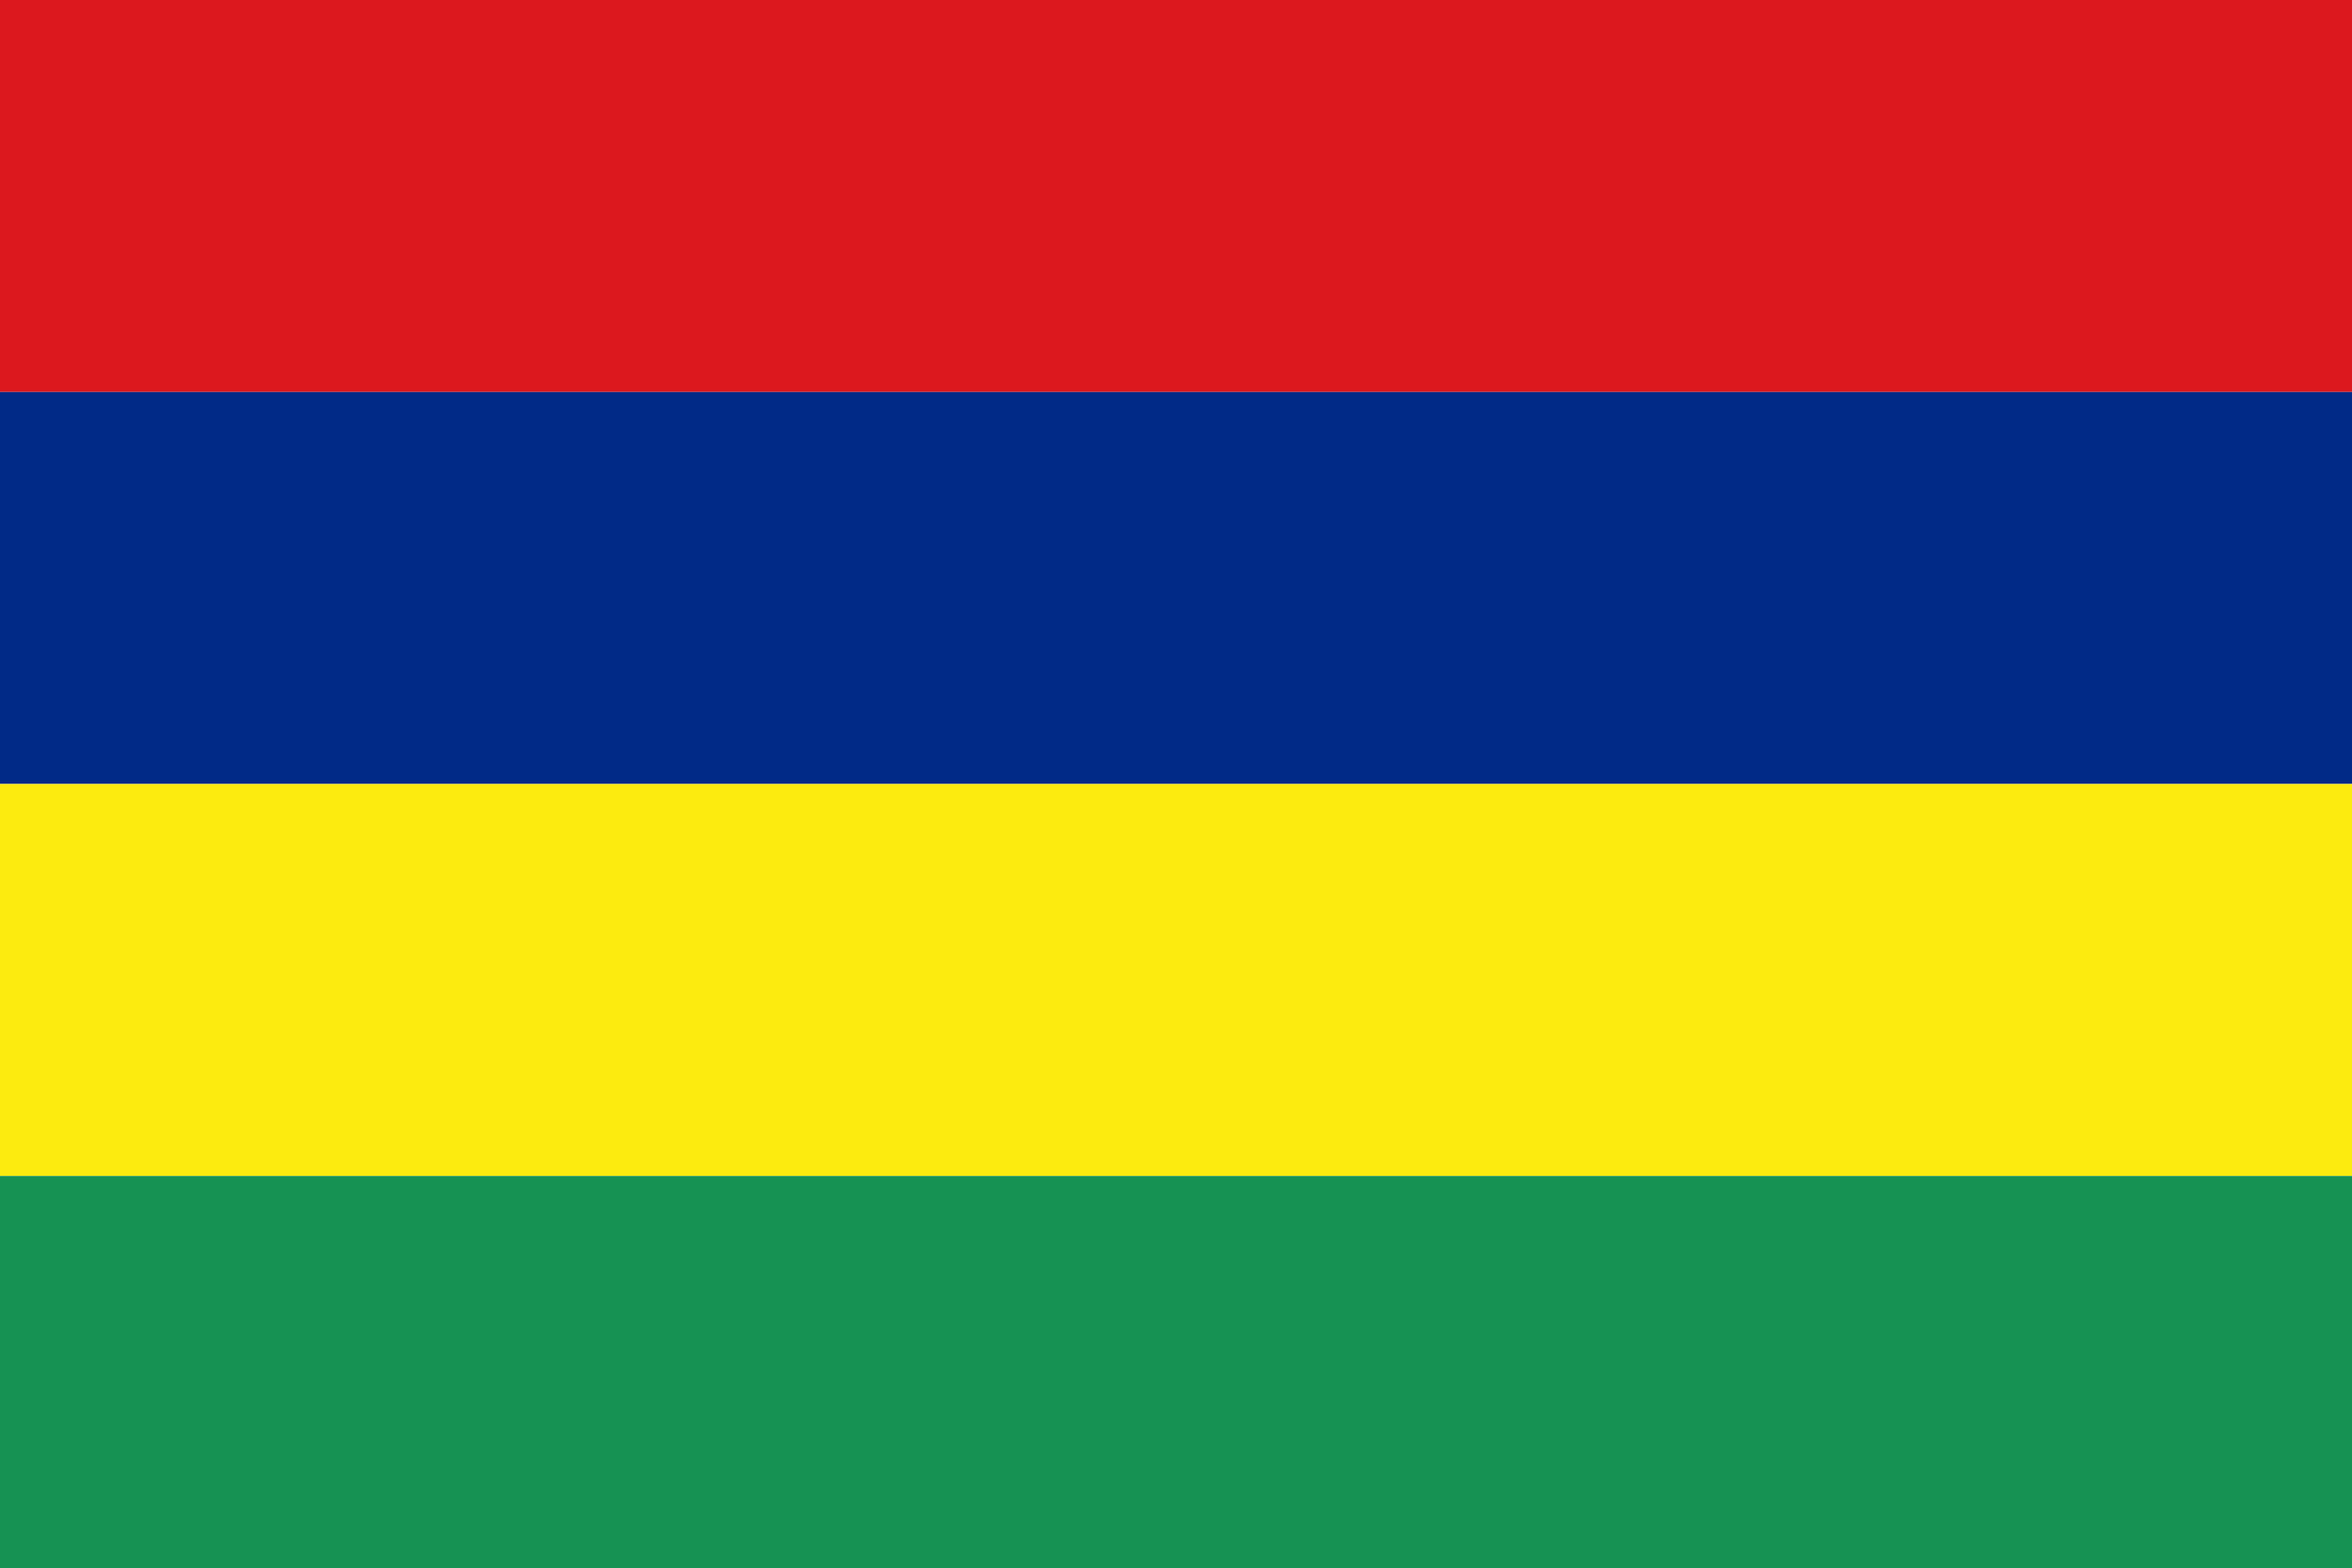 Mauritius's flag